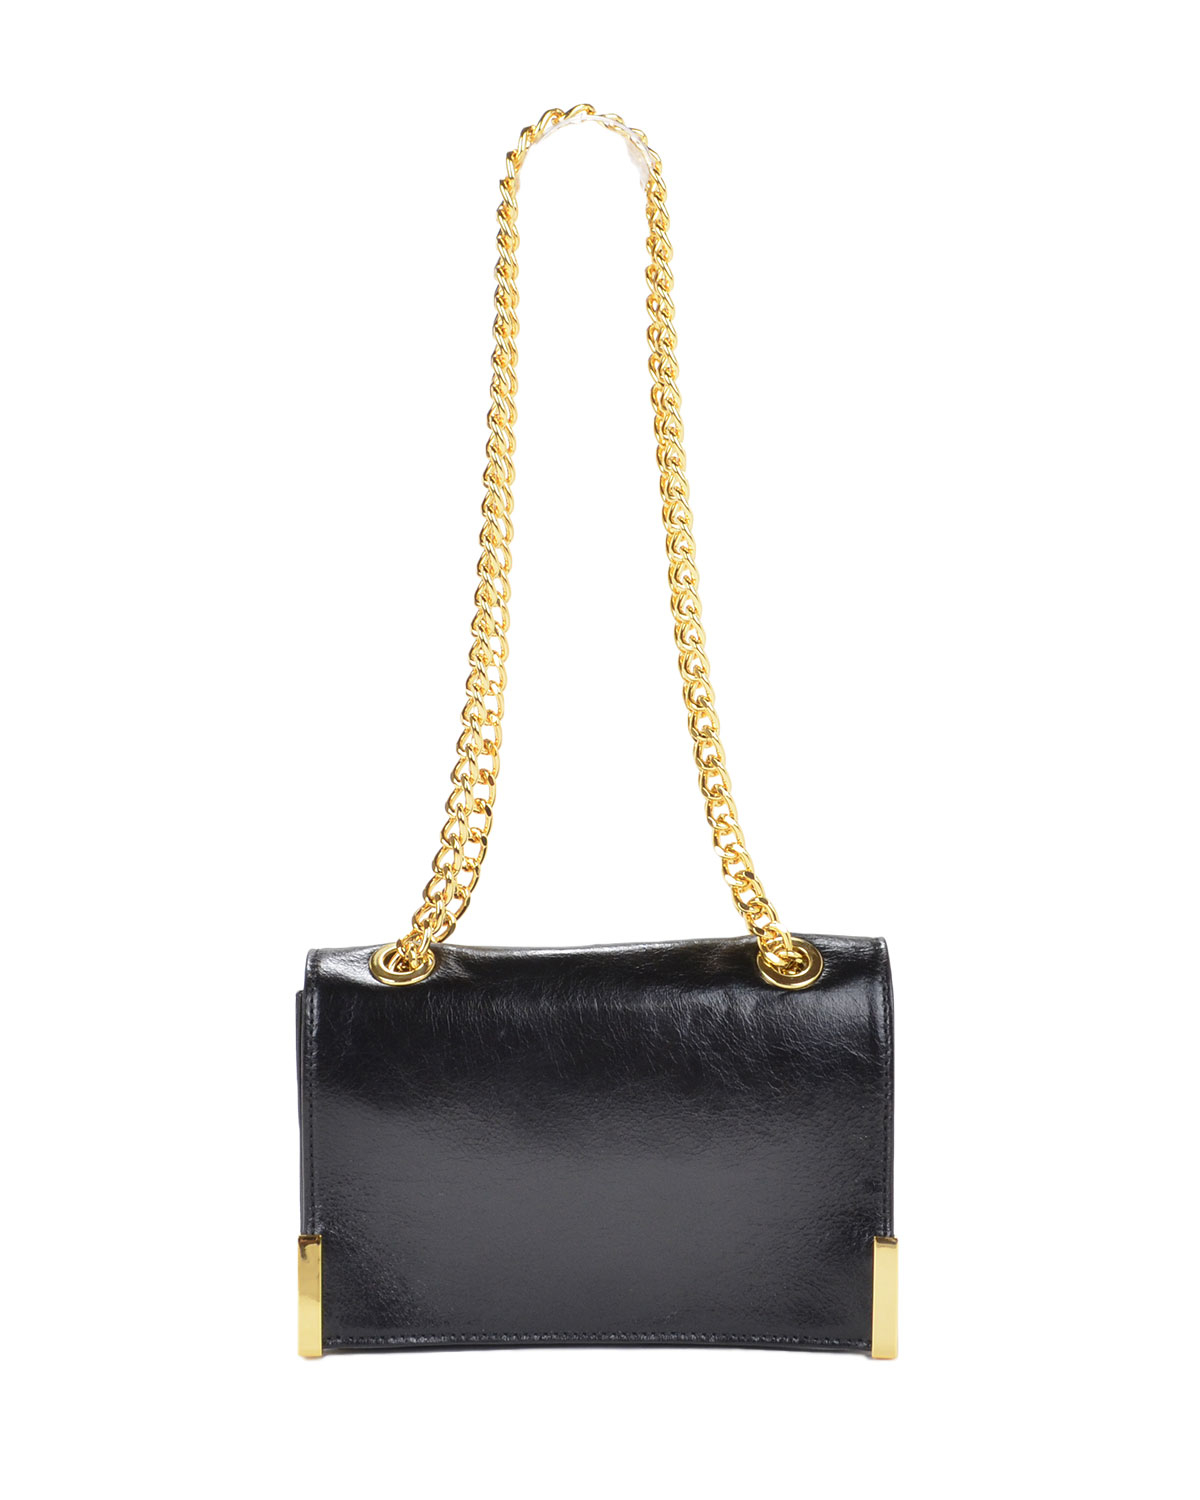 Badgley mischka Joelle Shine Leather Handbag in Black | Lyst